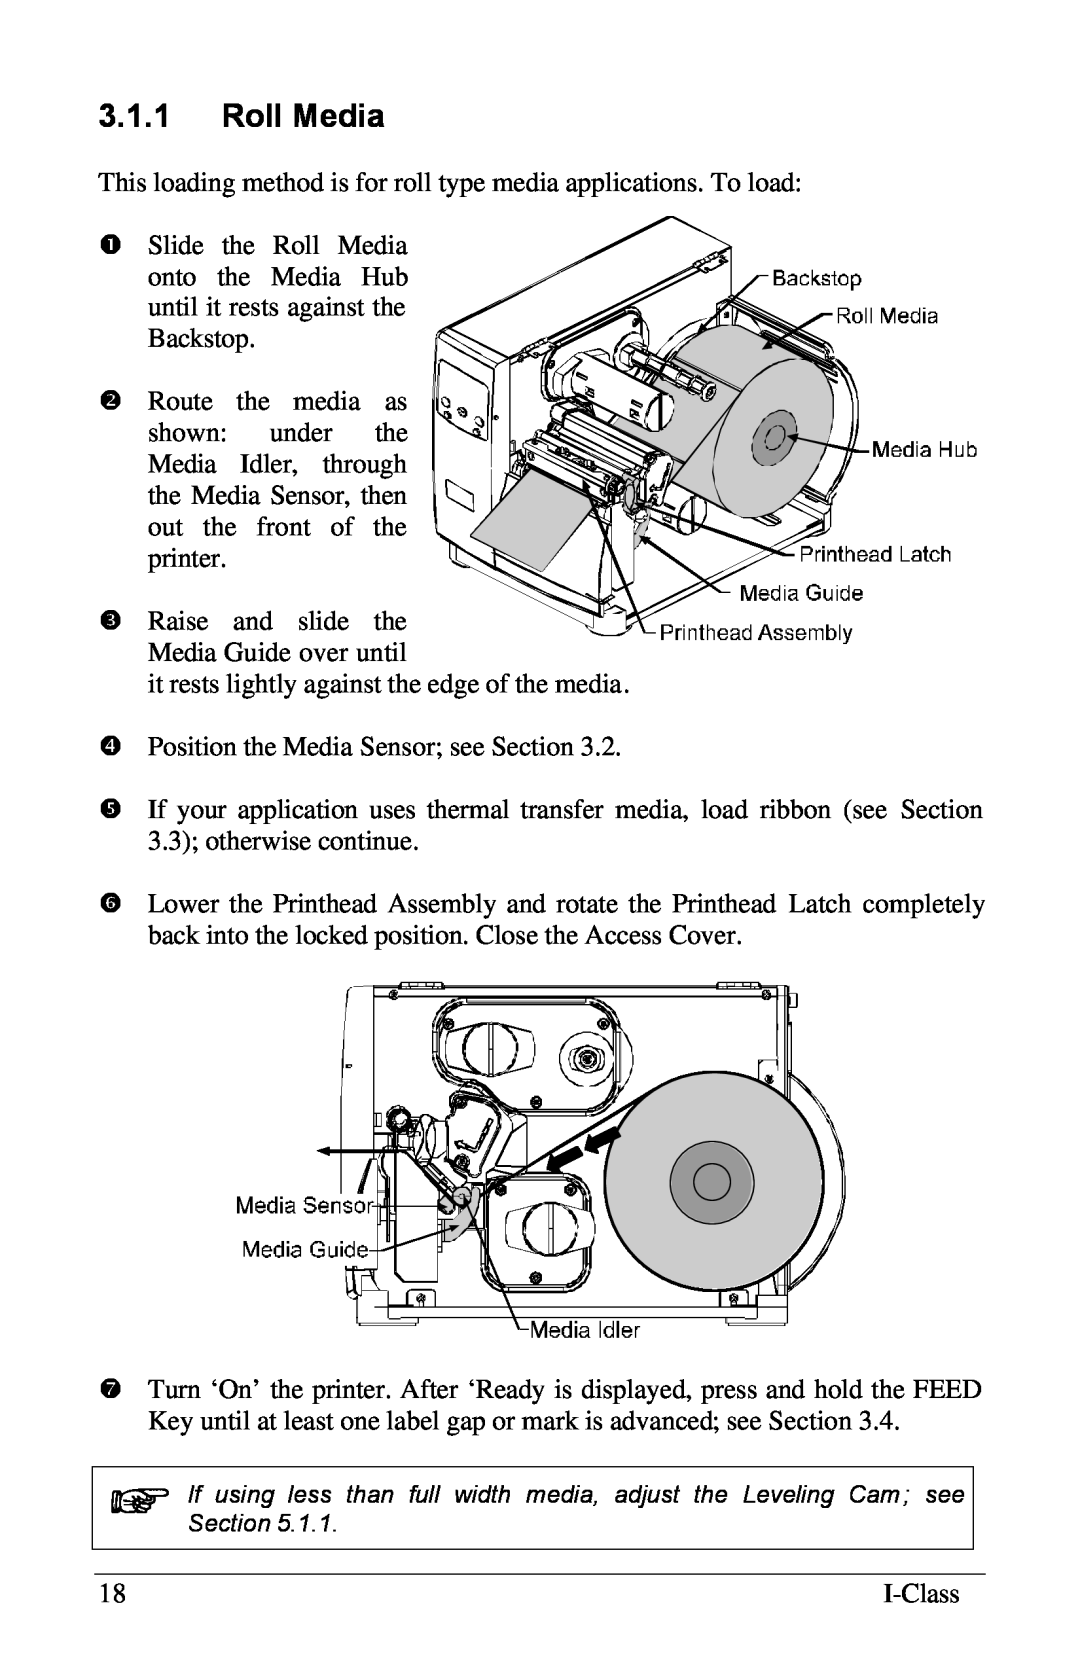 Xerox I Class manual 3.1.1Roll Media 